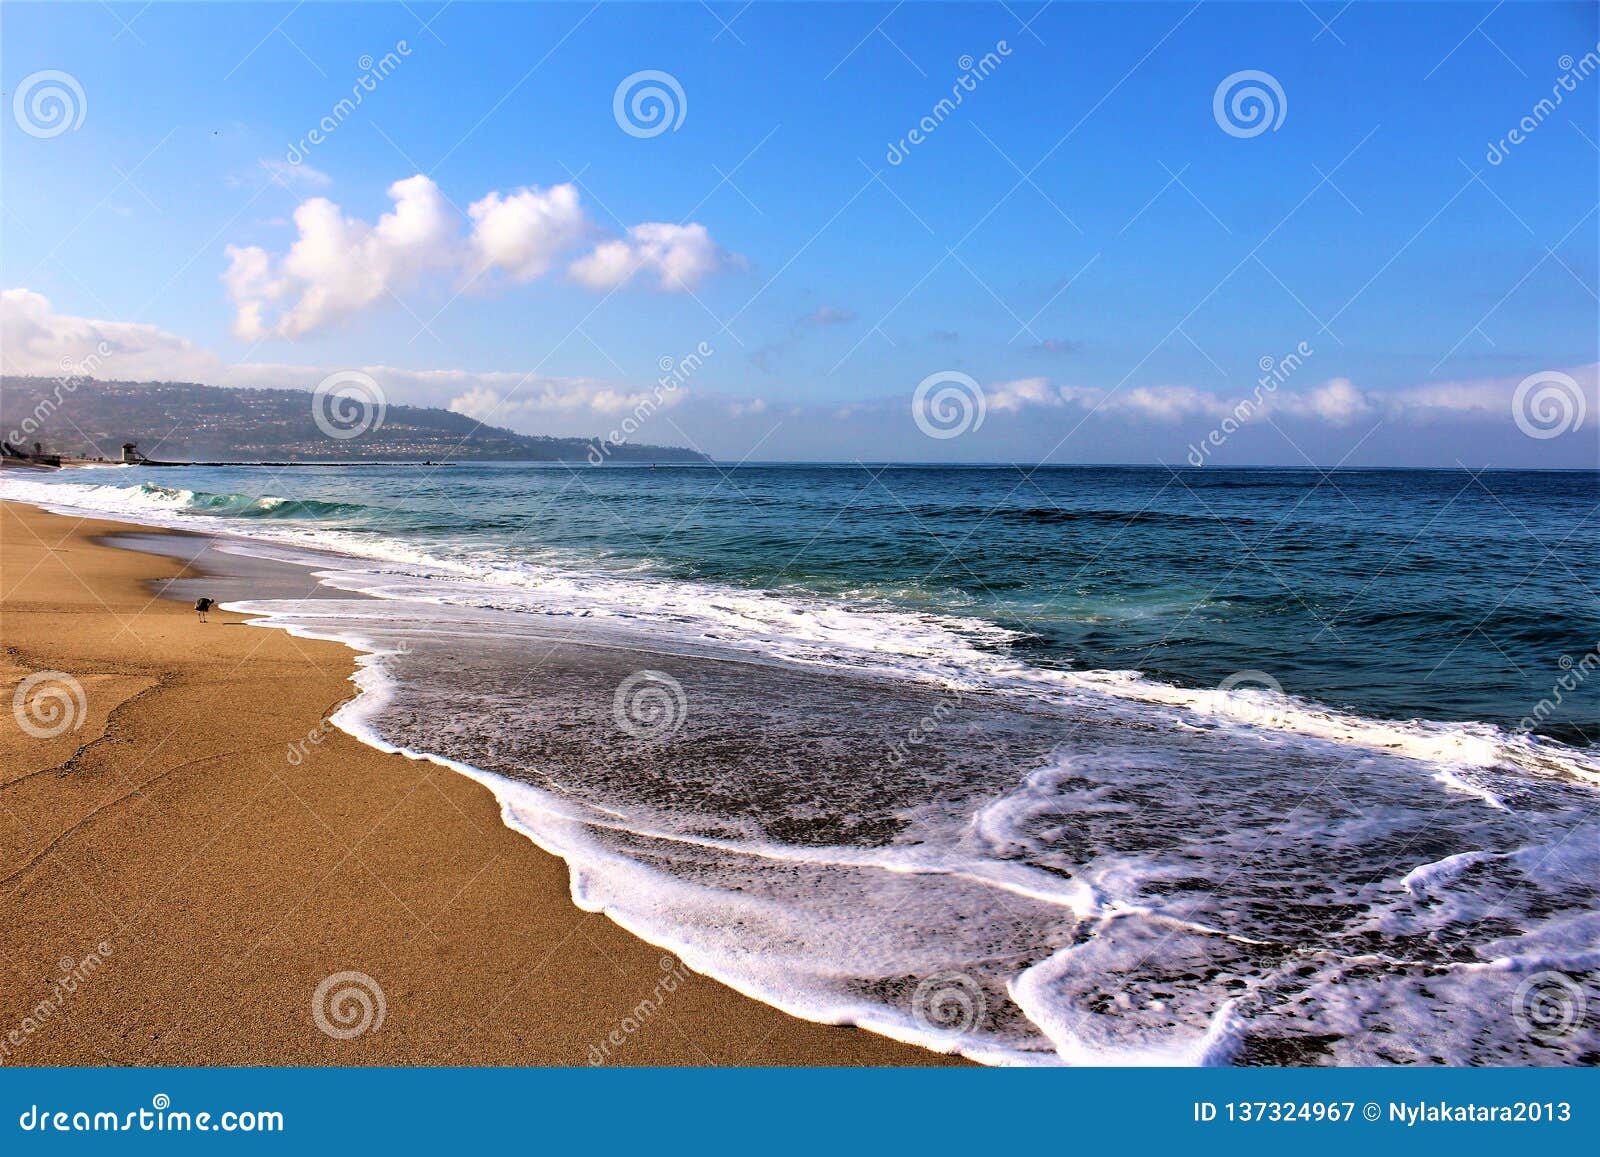 beachfront at hermosa beach california in los angeles county, california, united states